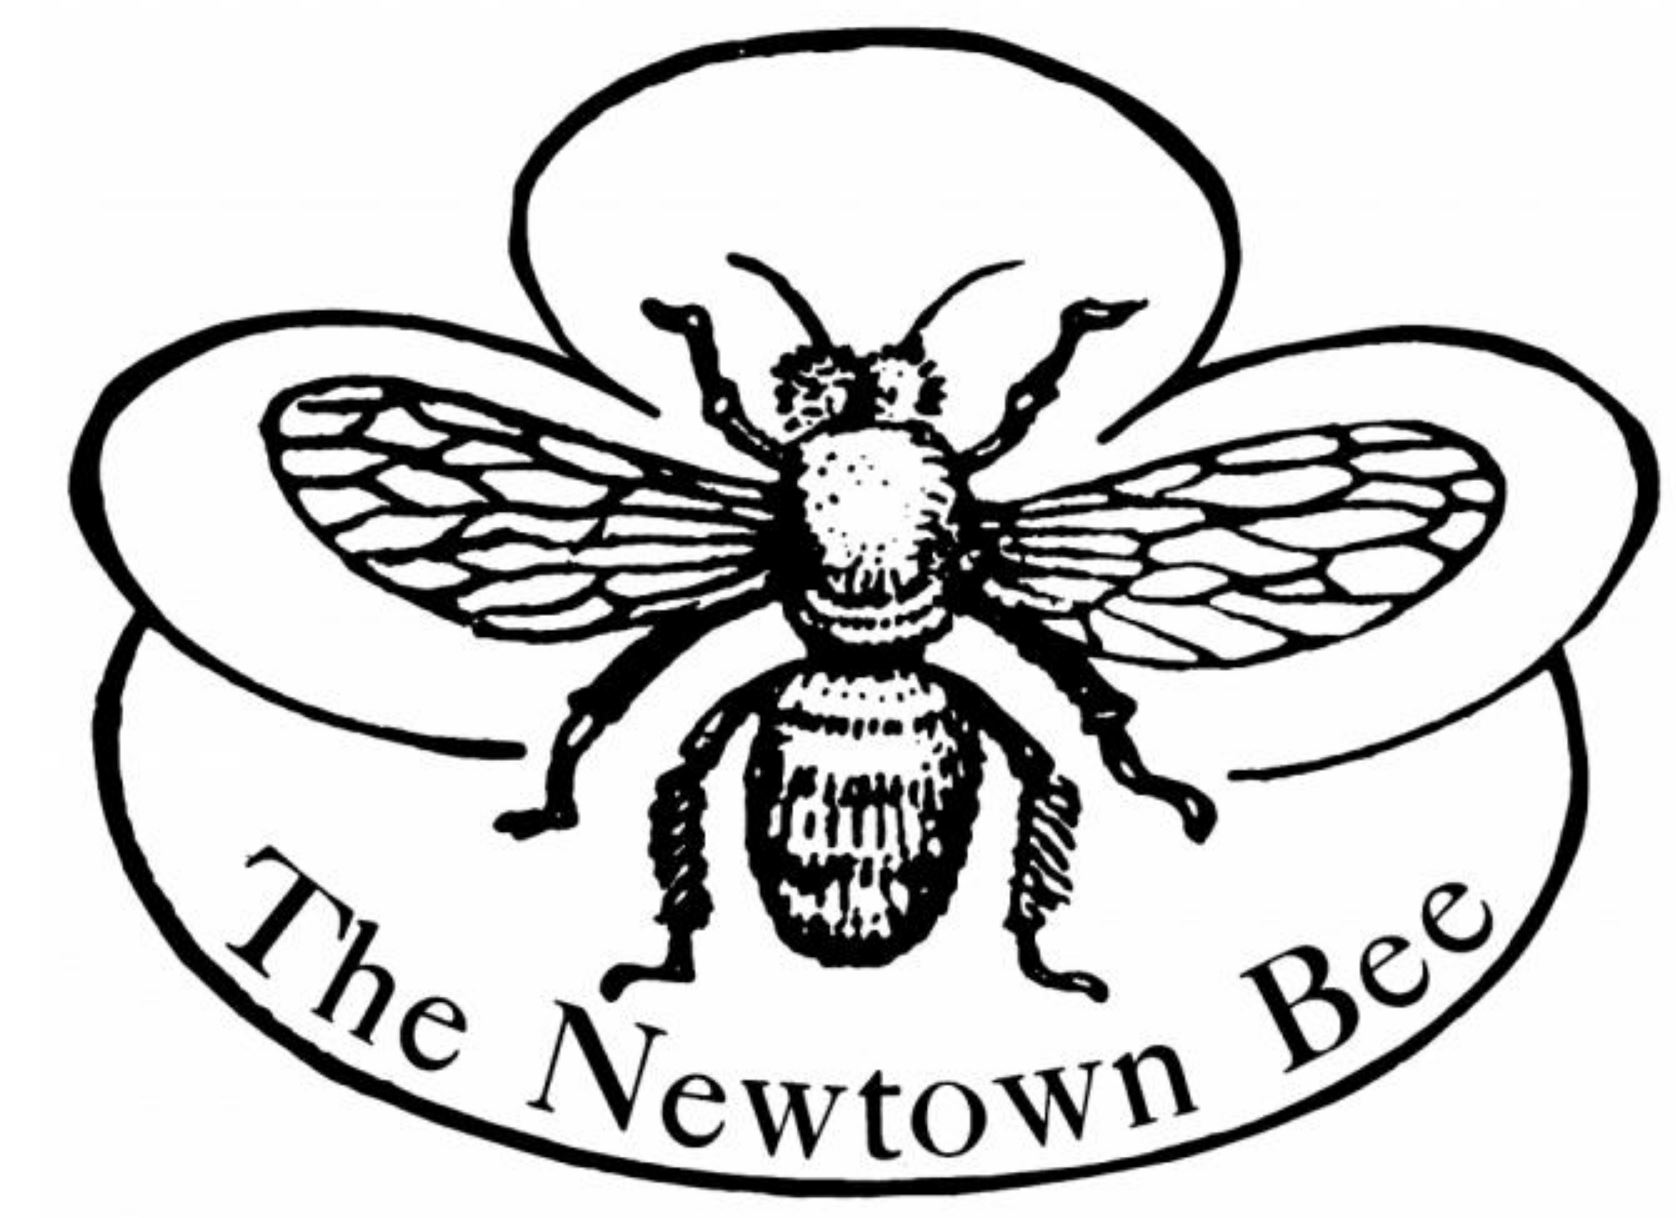 The Newtown Bee Endorses Tony Hwang